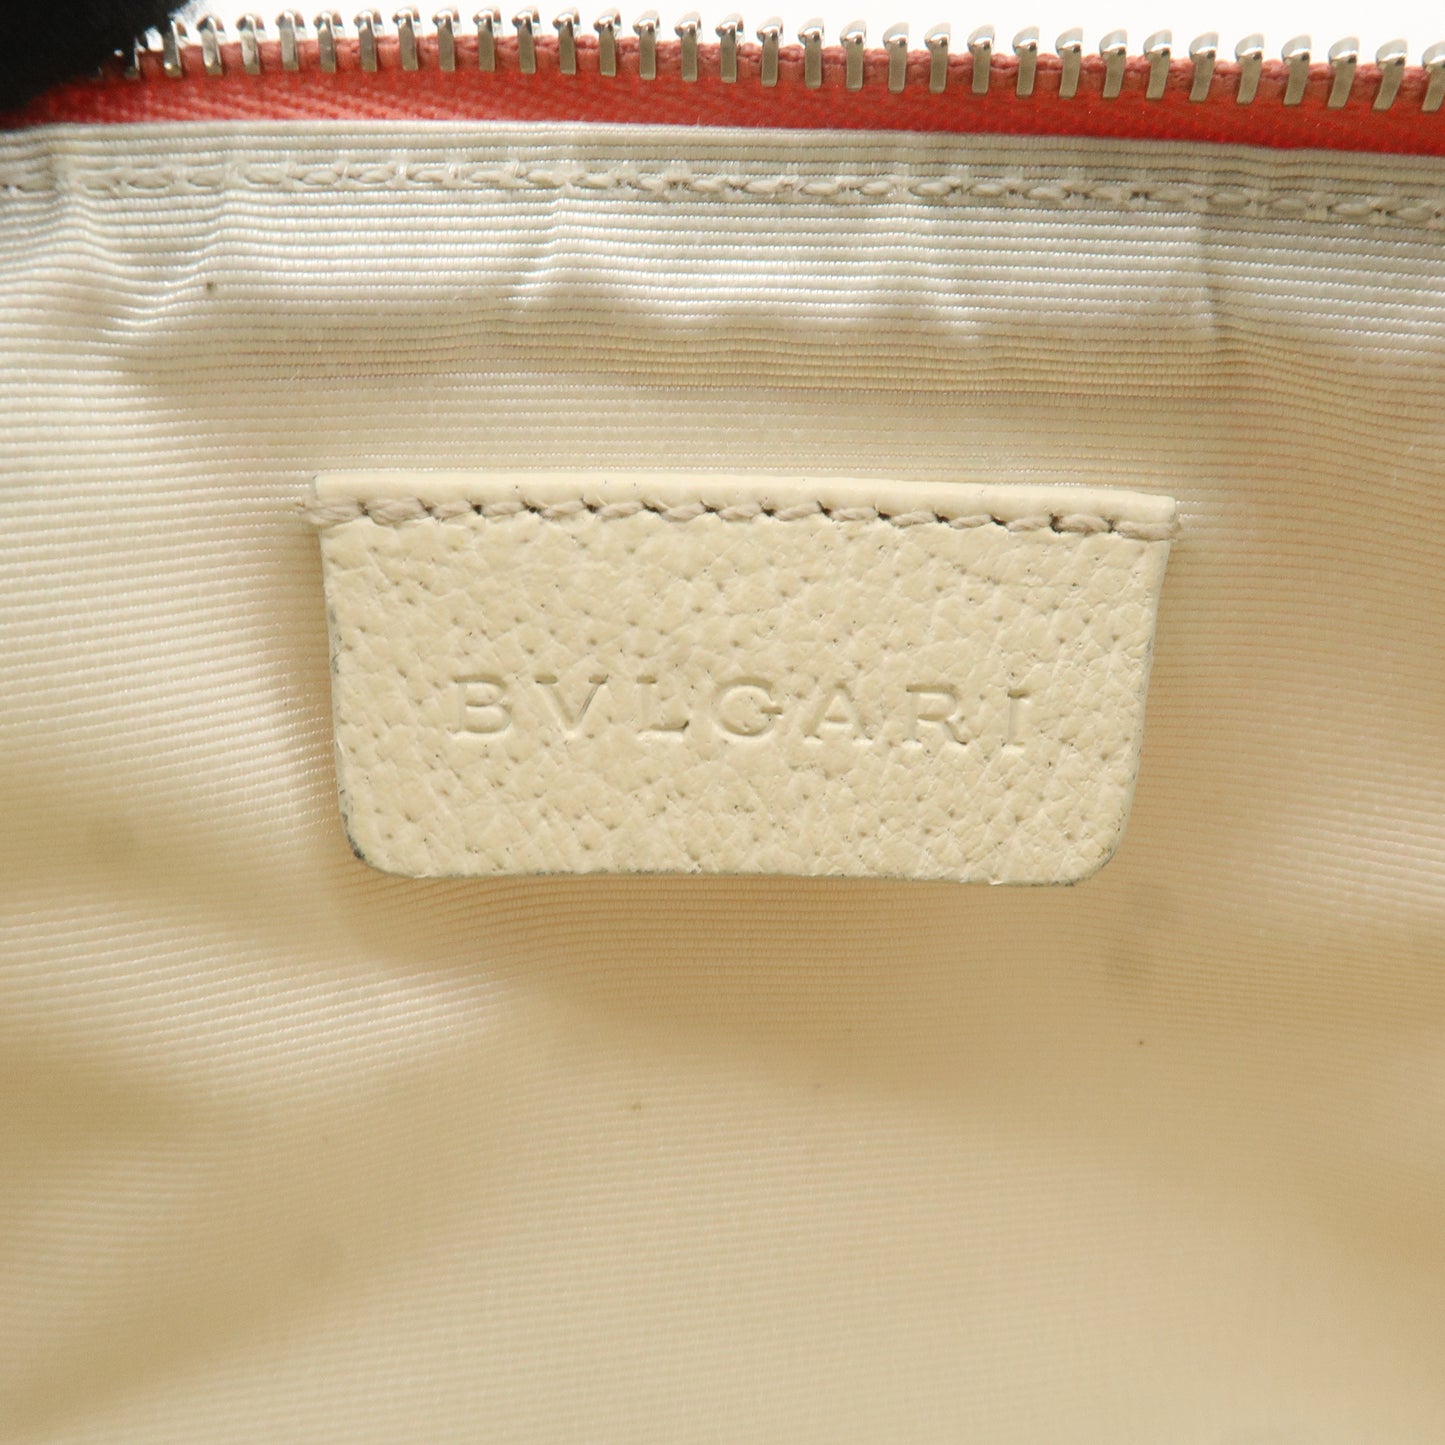 BVLGARI Logo Mania Canvas Leather Shoulder Bag Pink Ivory